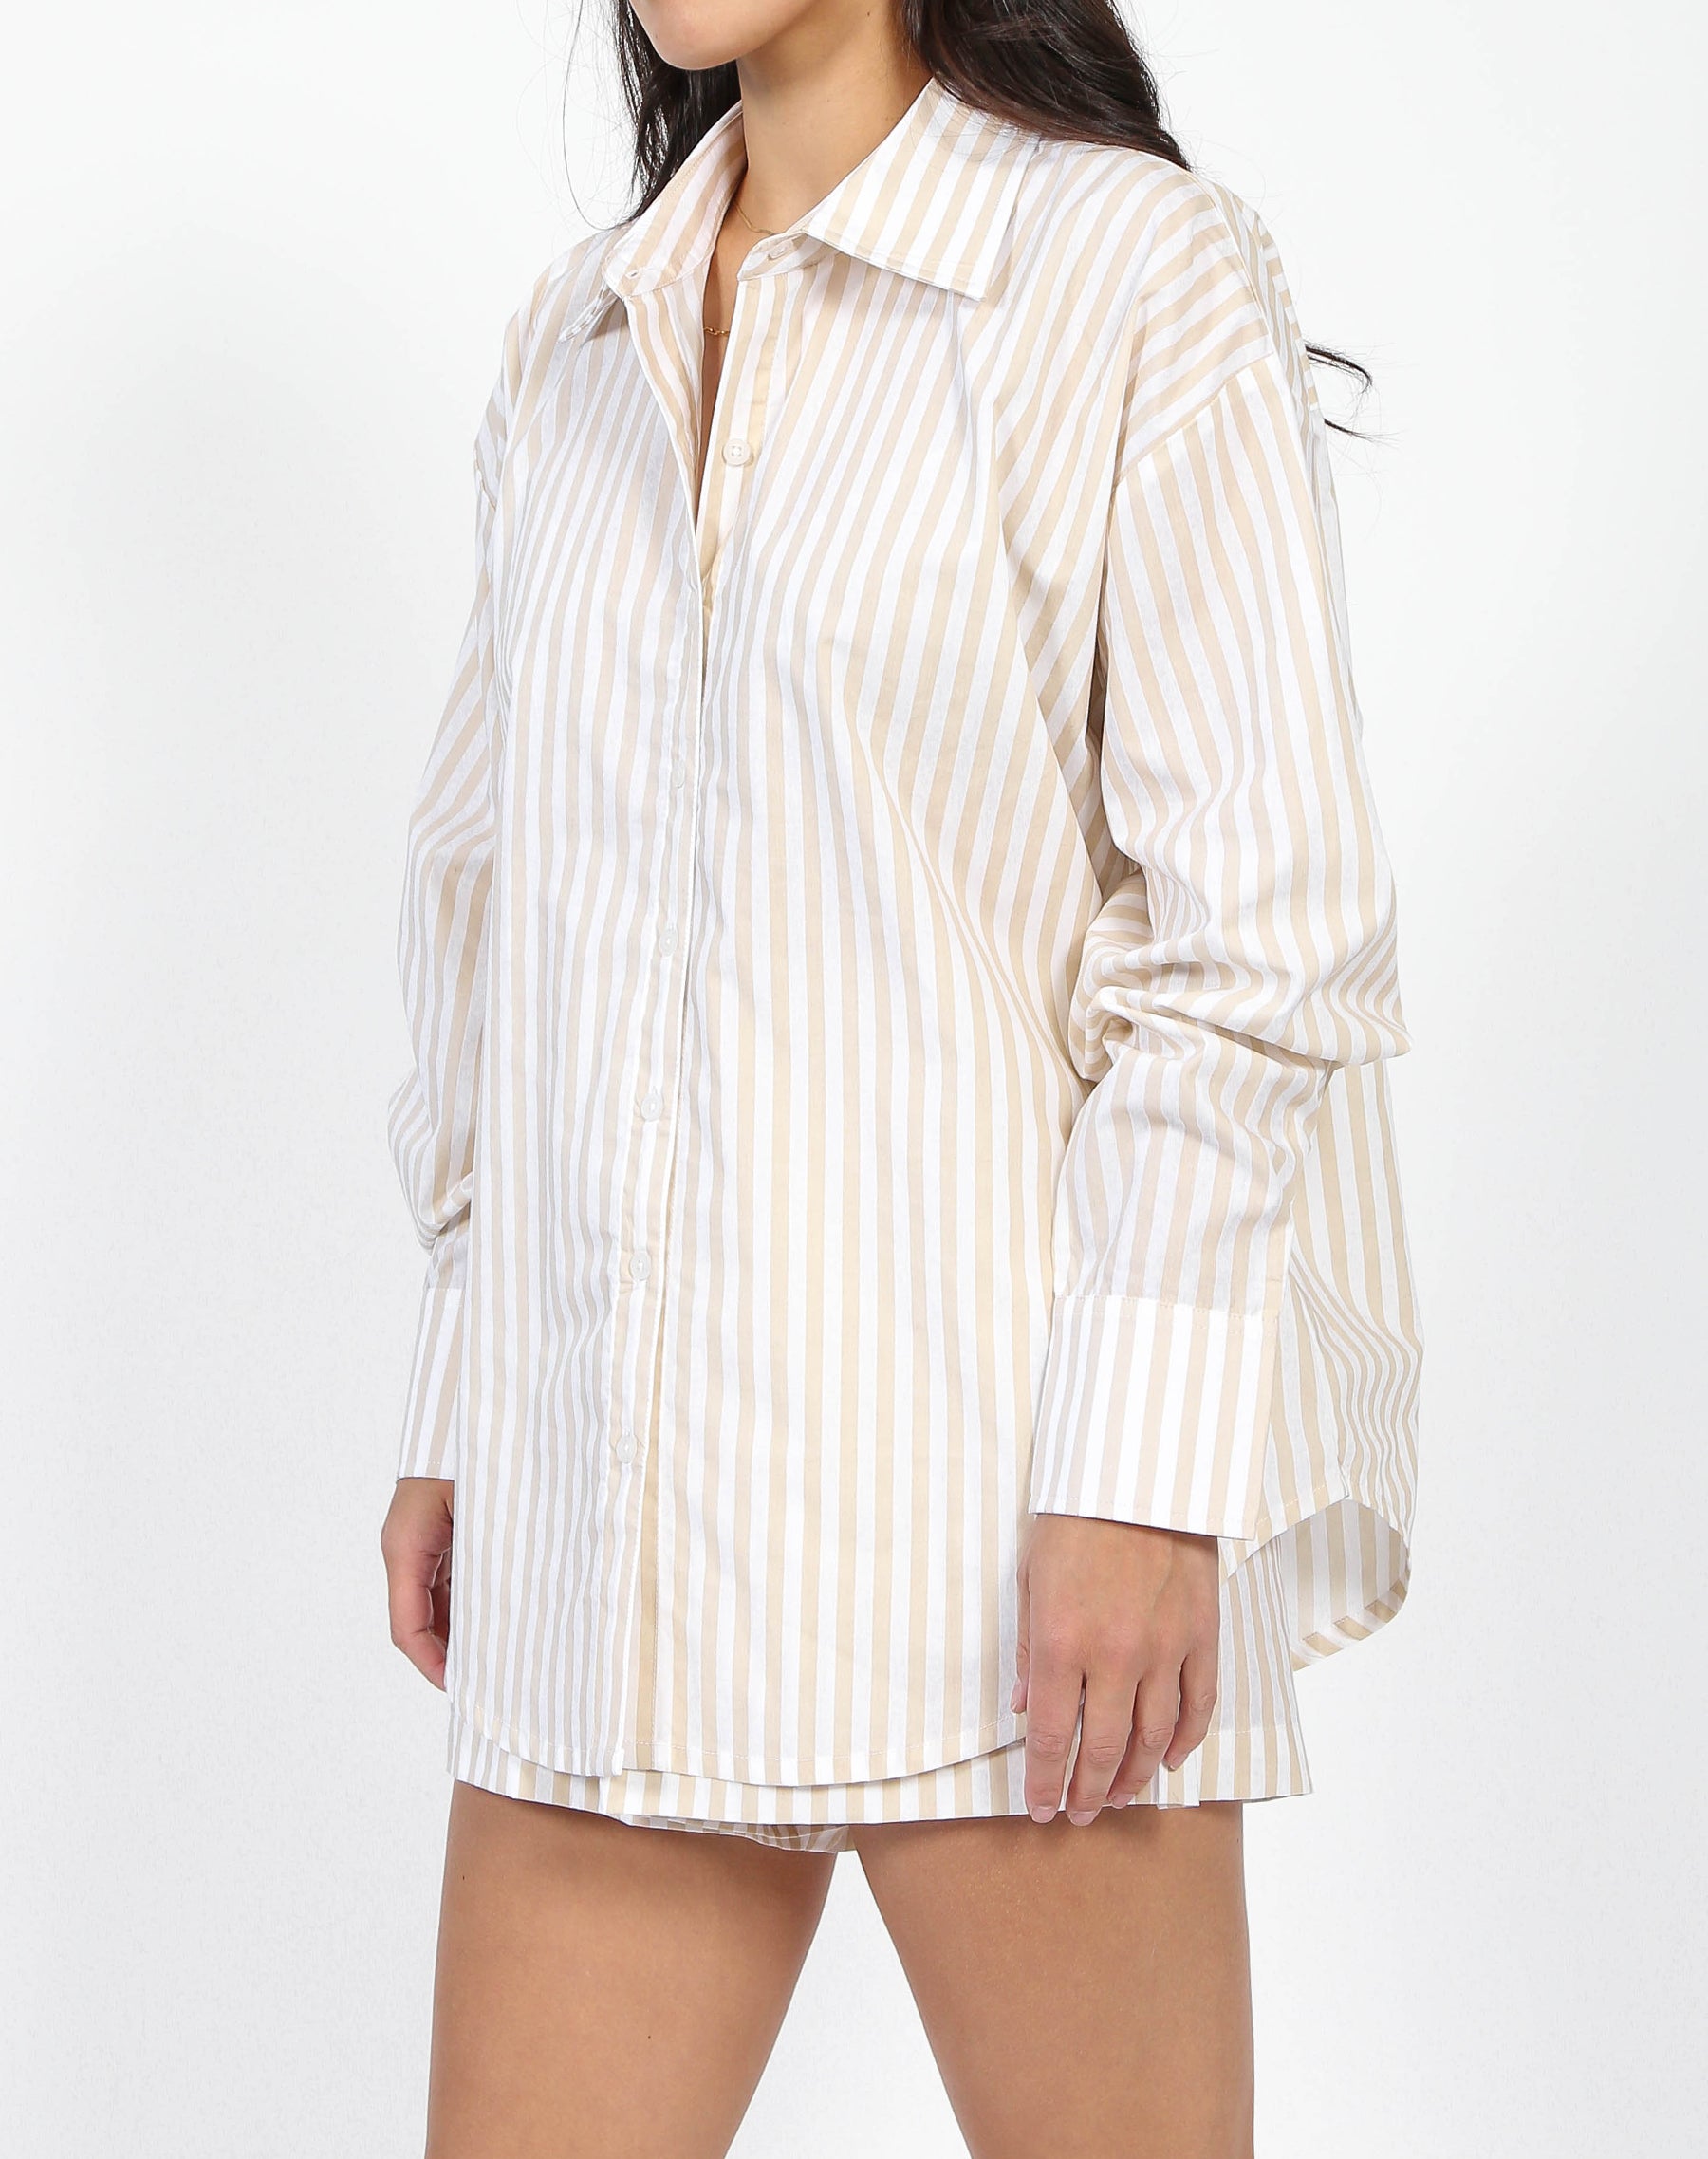 Striped Button Up Shirt | Almond Milk